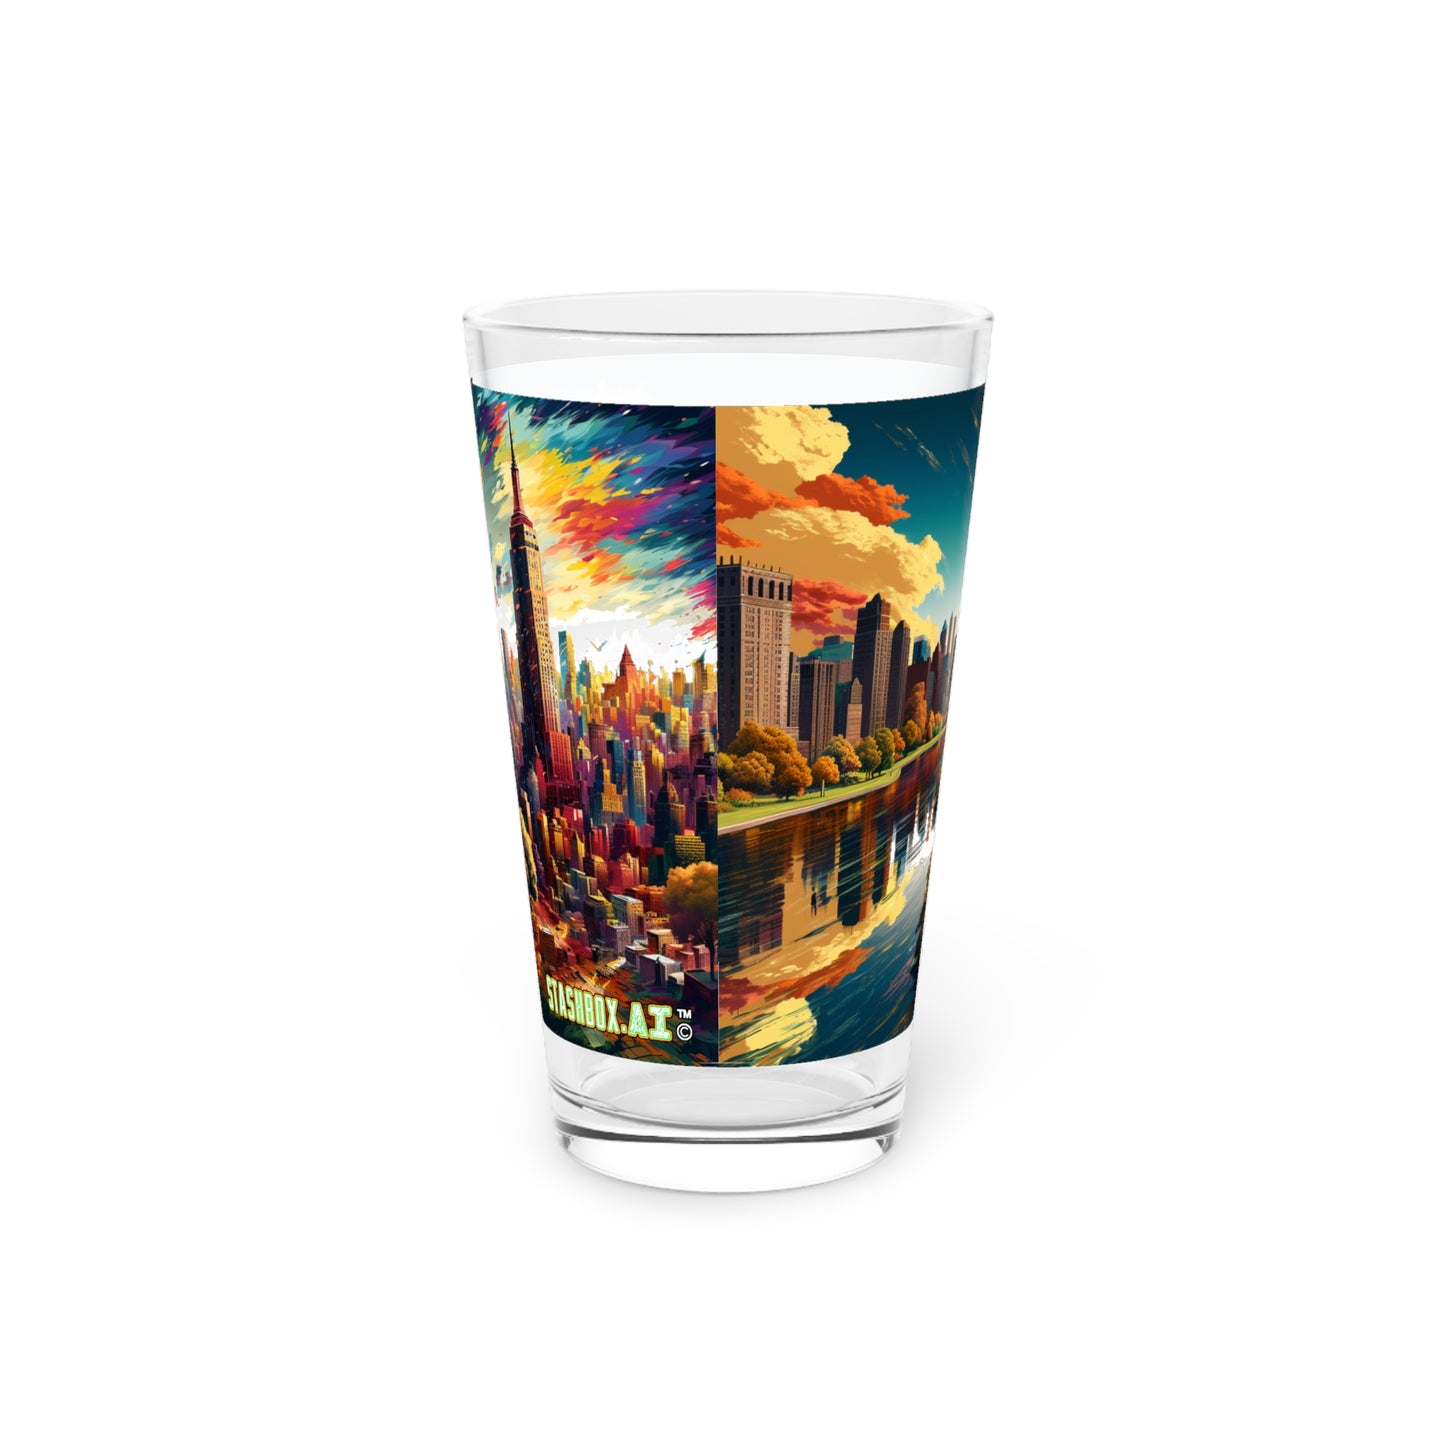 Retro-Futuristic New York Pint Glass - Stashbox NYC Design - #RetroCityscape #FuturisticArt #MirroredDesign #StashboxExclusive #CityscapeElegance